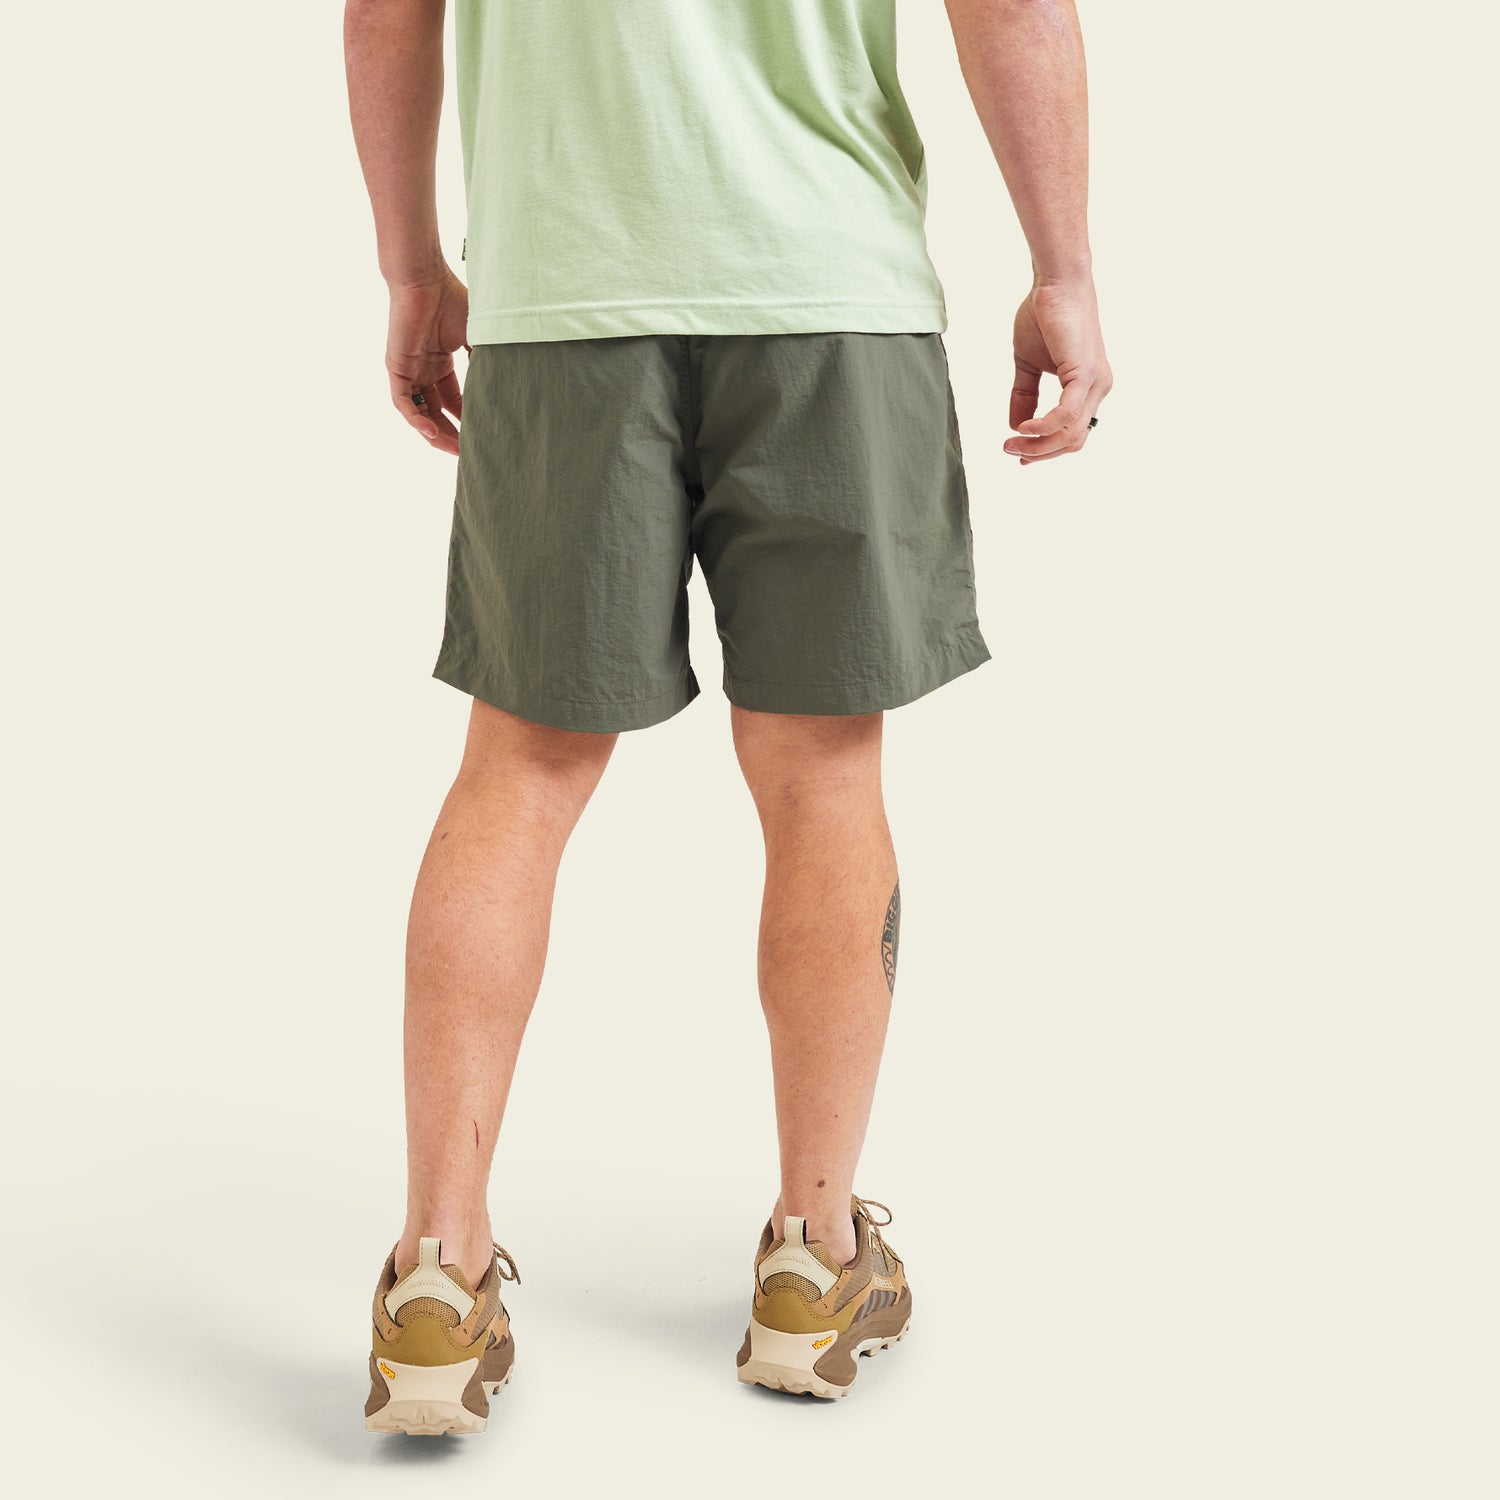 Pedernales Packable Shorts